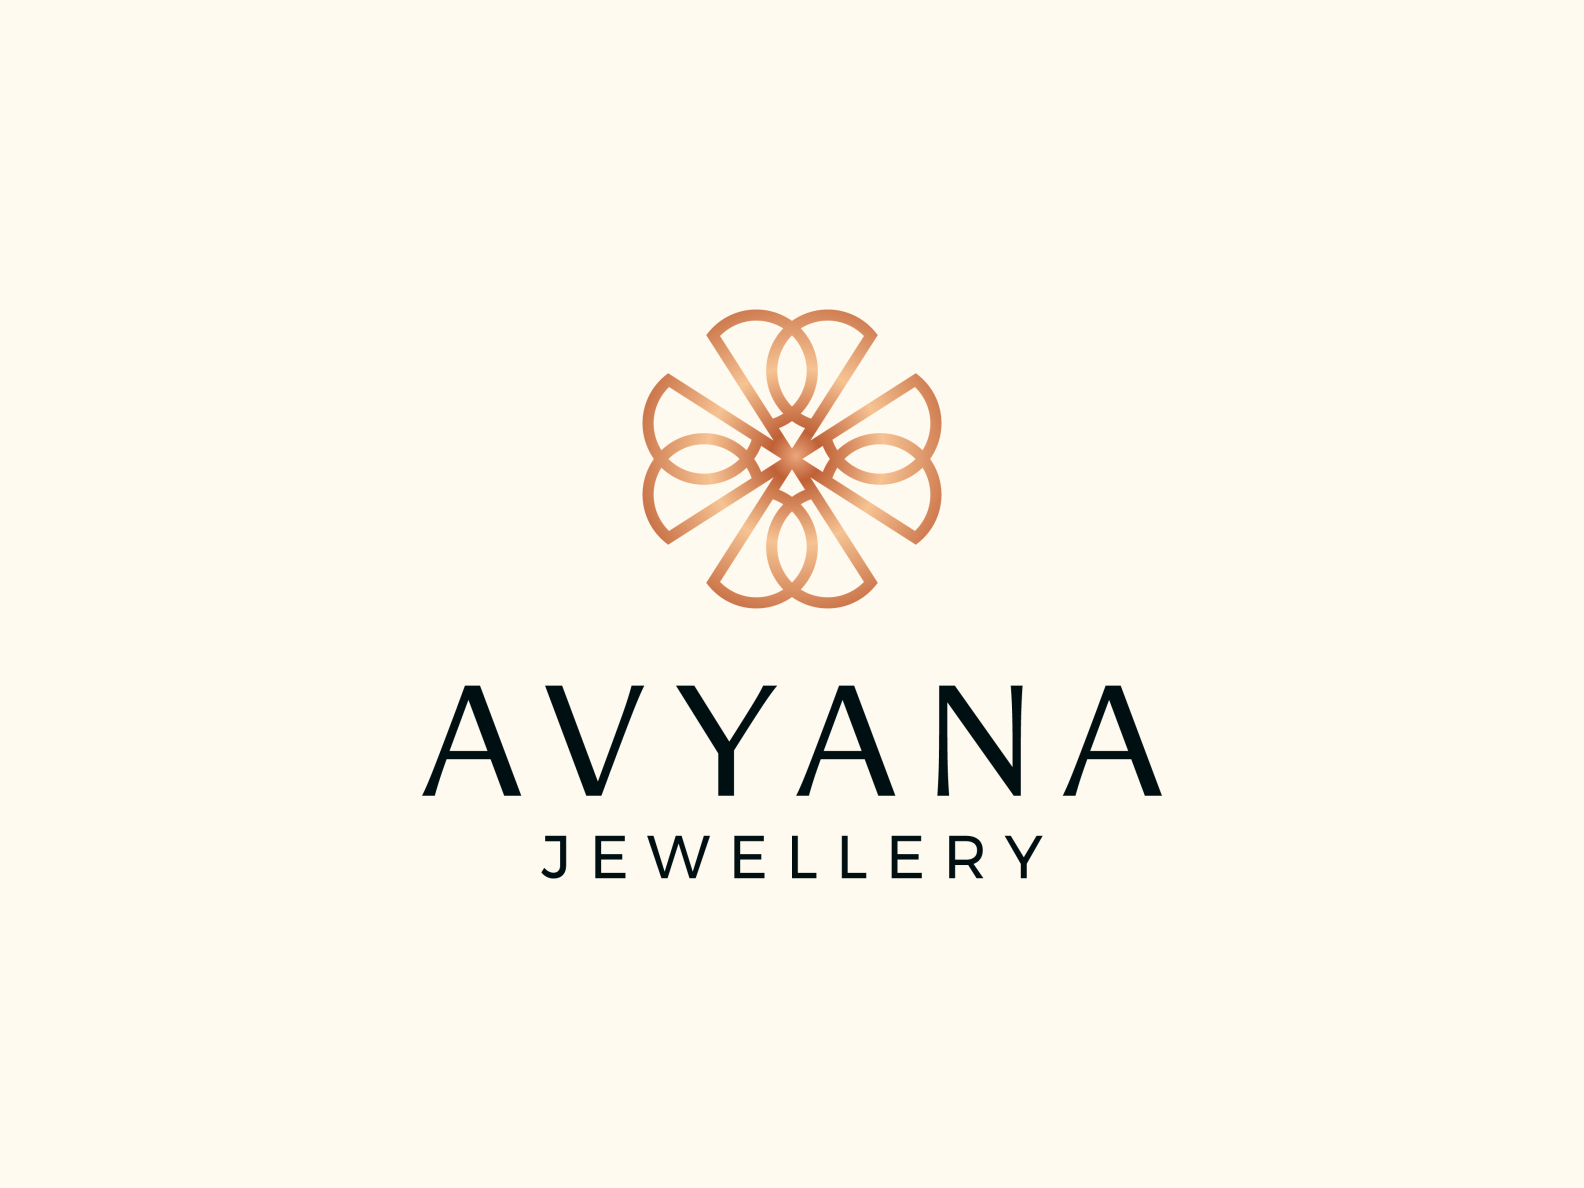 Avyana - Jewellery by Zainul Khafidz on Dribbble